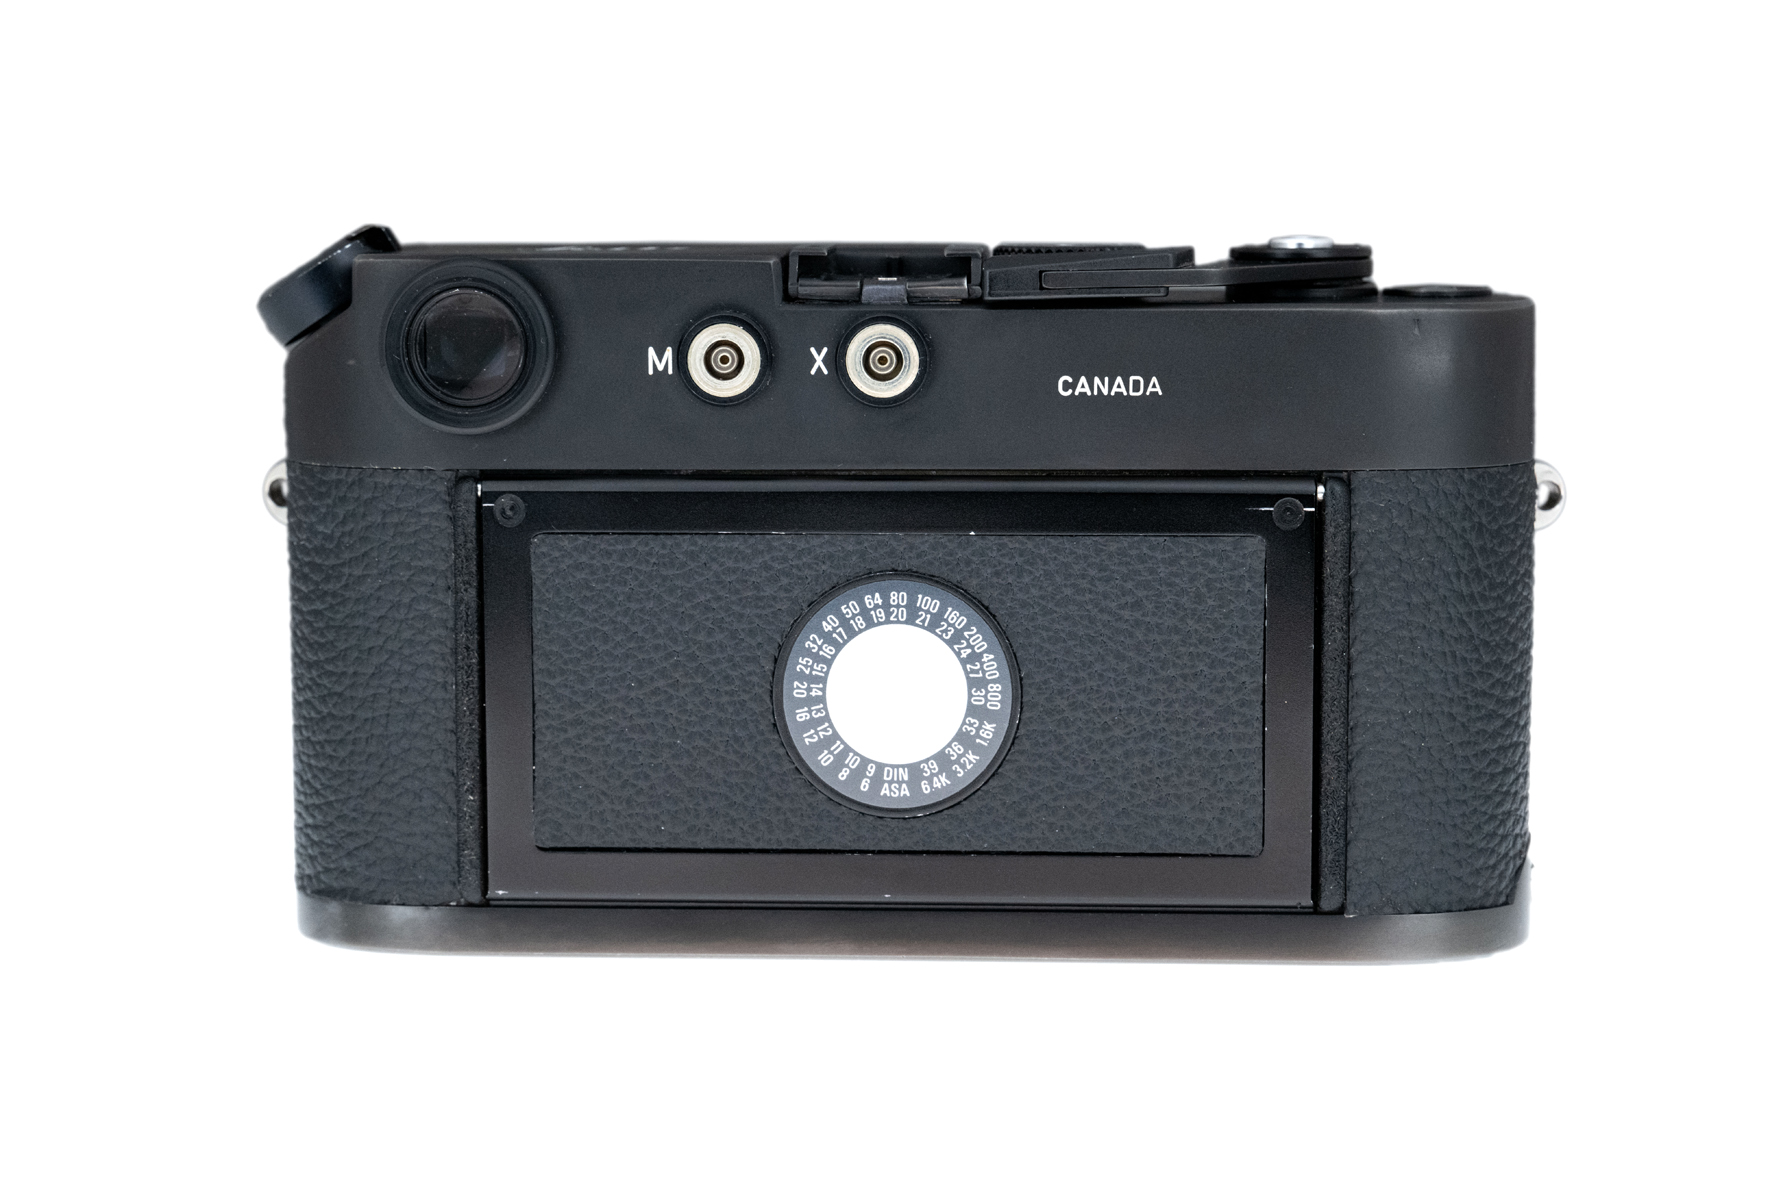 Leica M4-2 black chrome plated